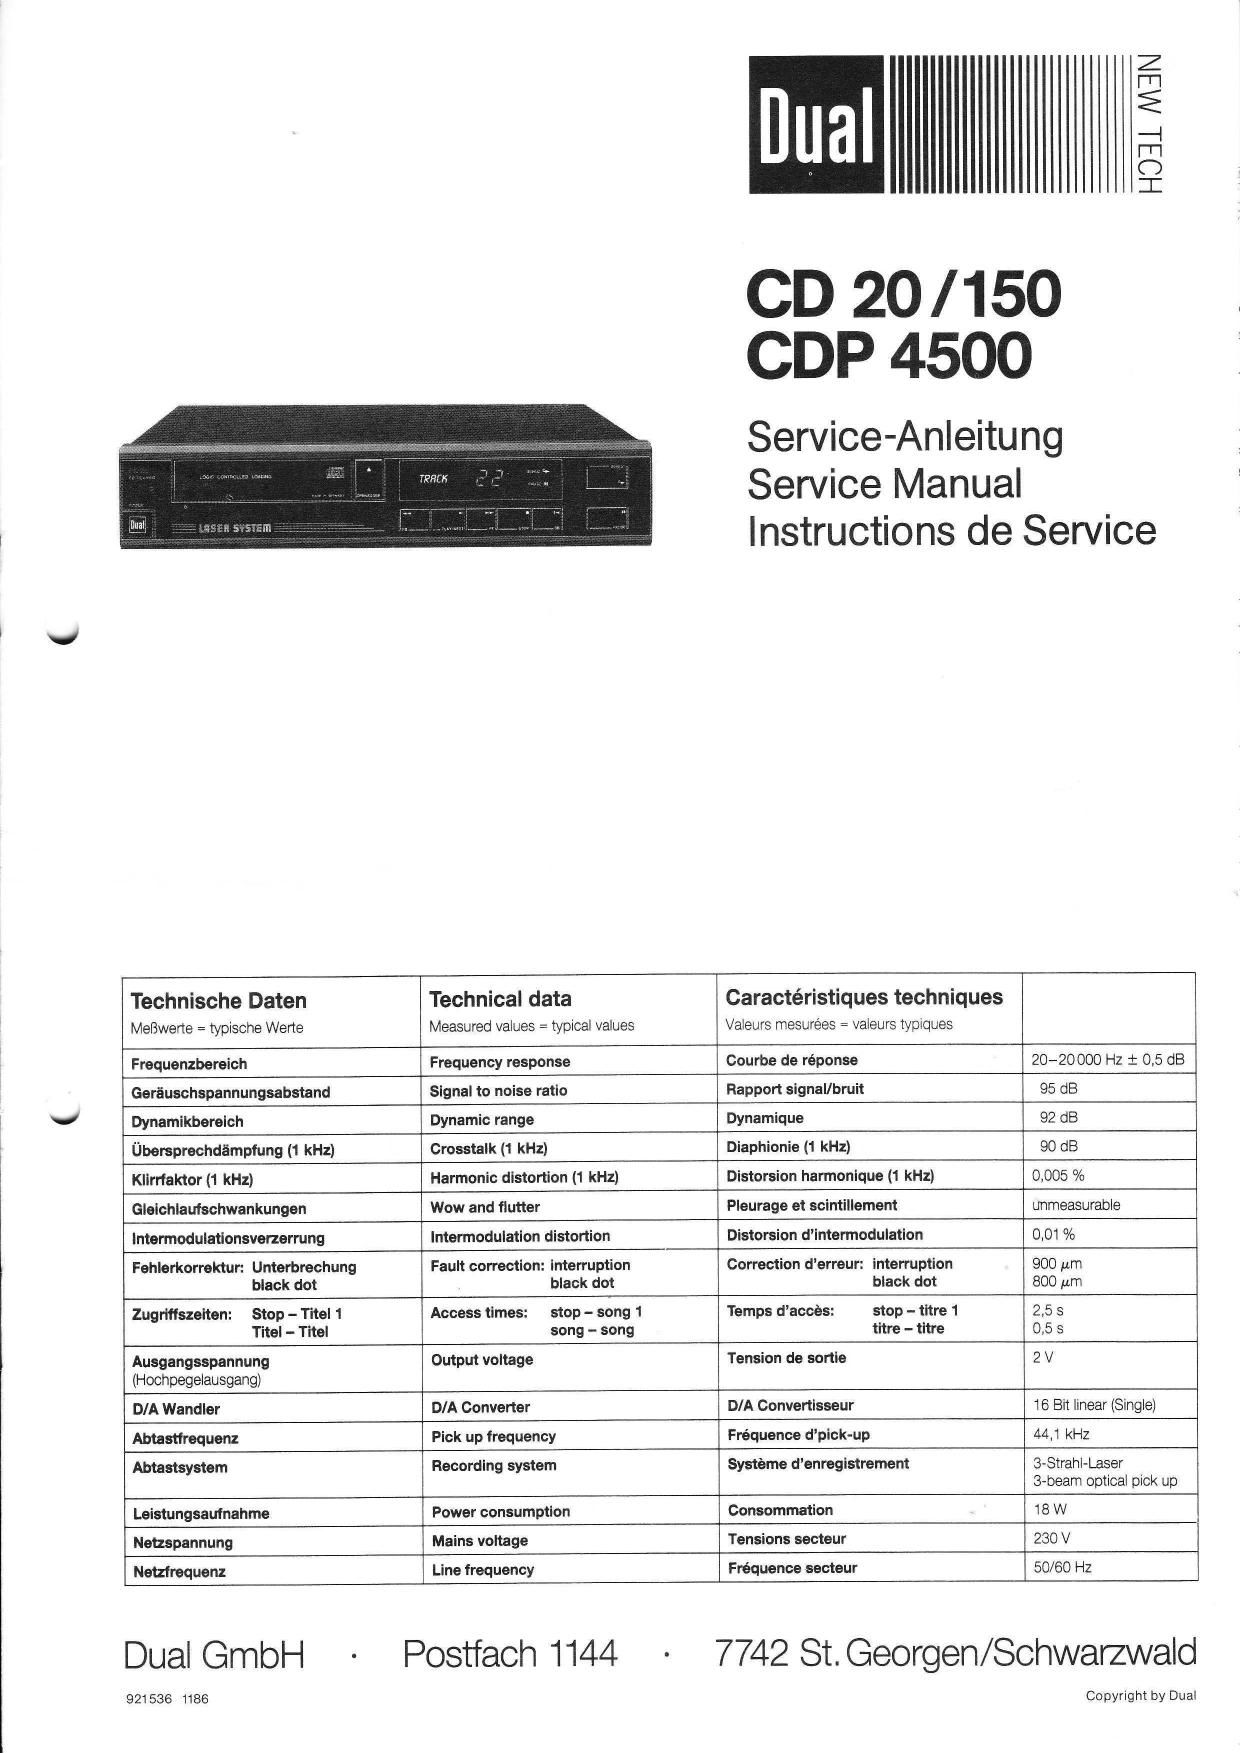 Dual CD 20 Service Manual